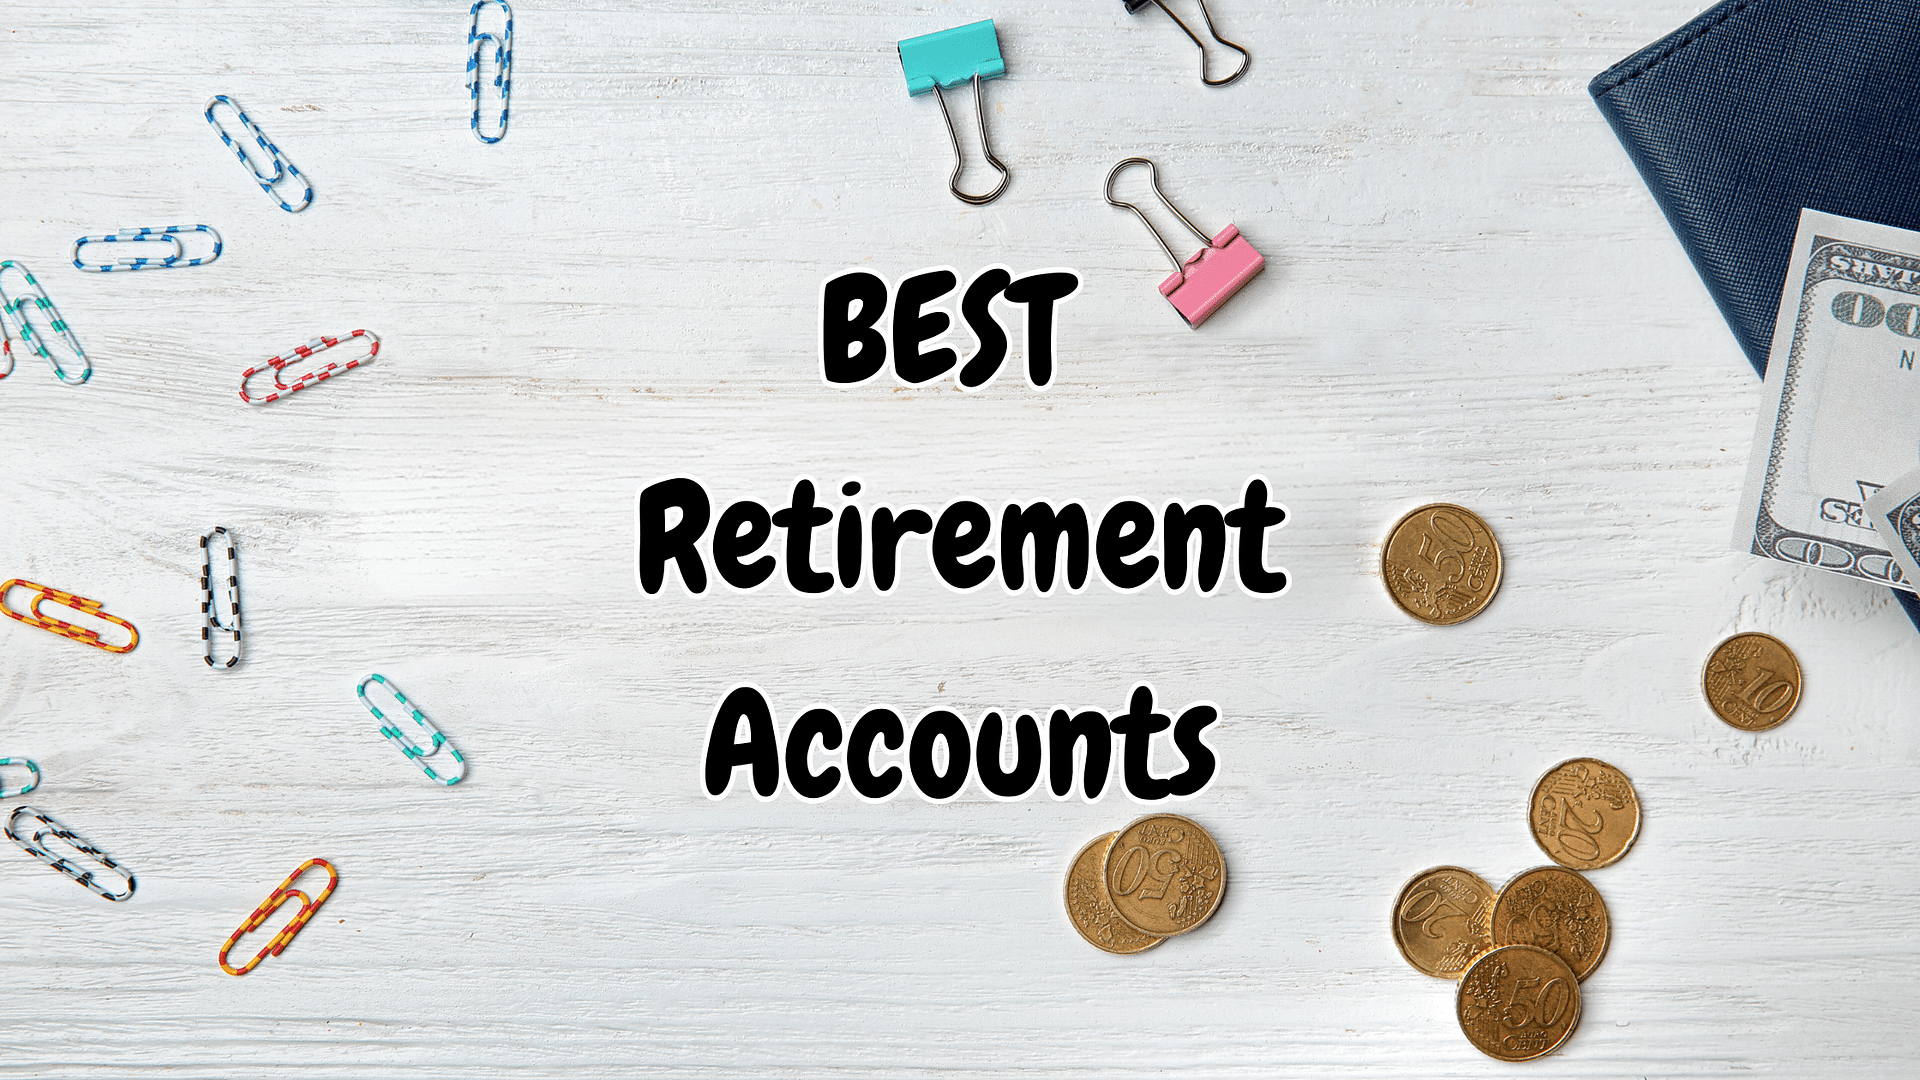 Best Retirement Accounts